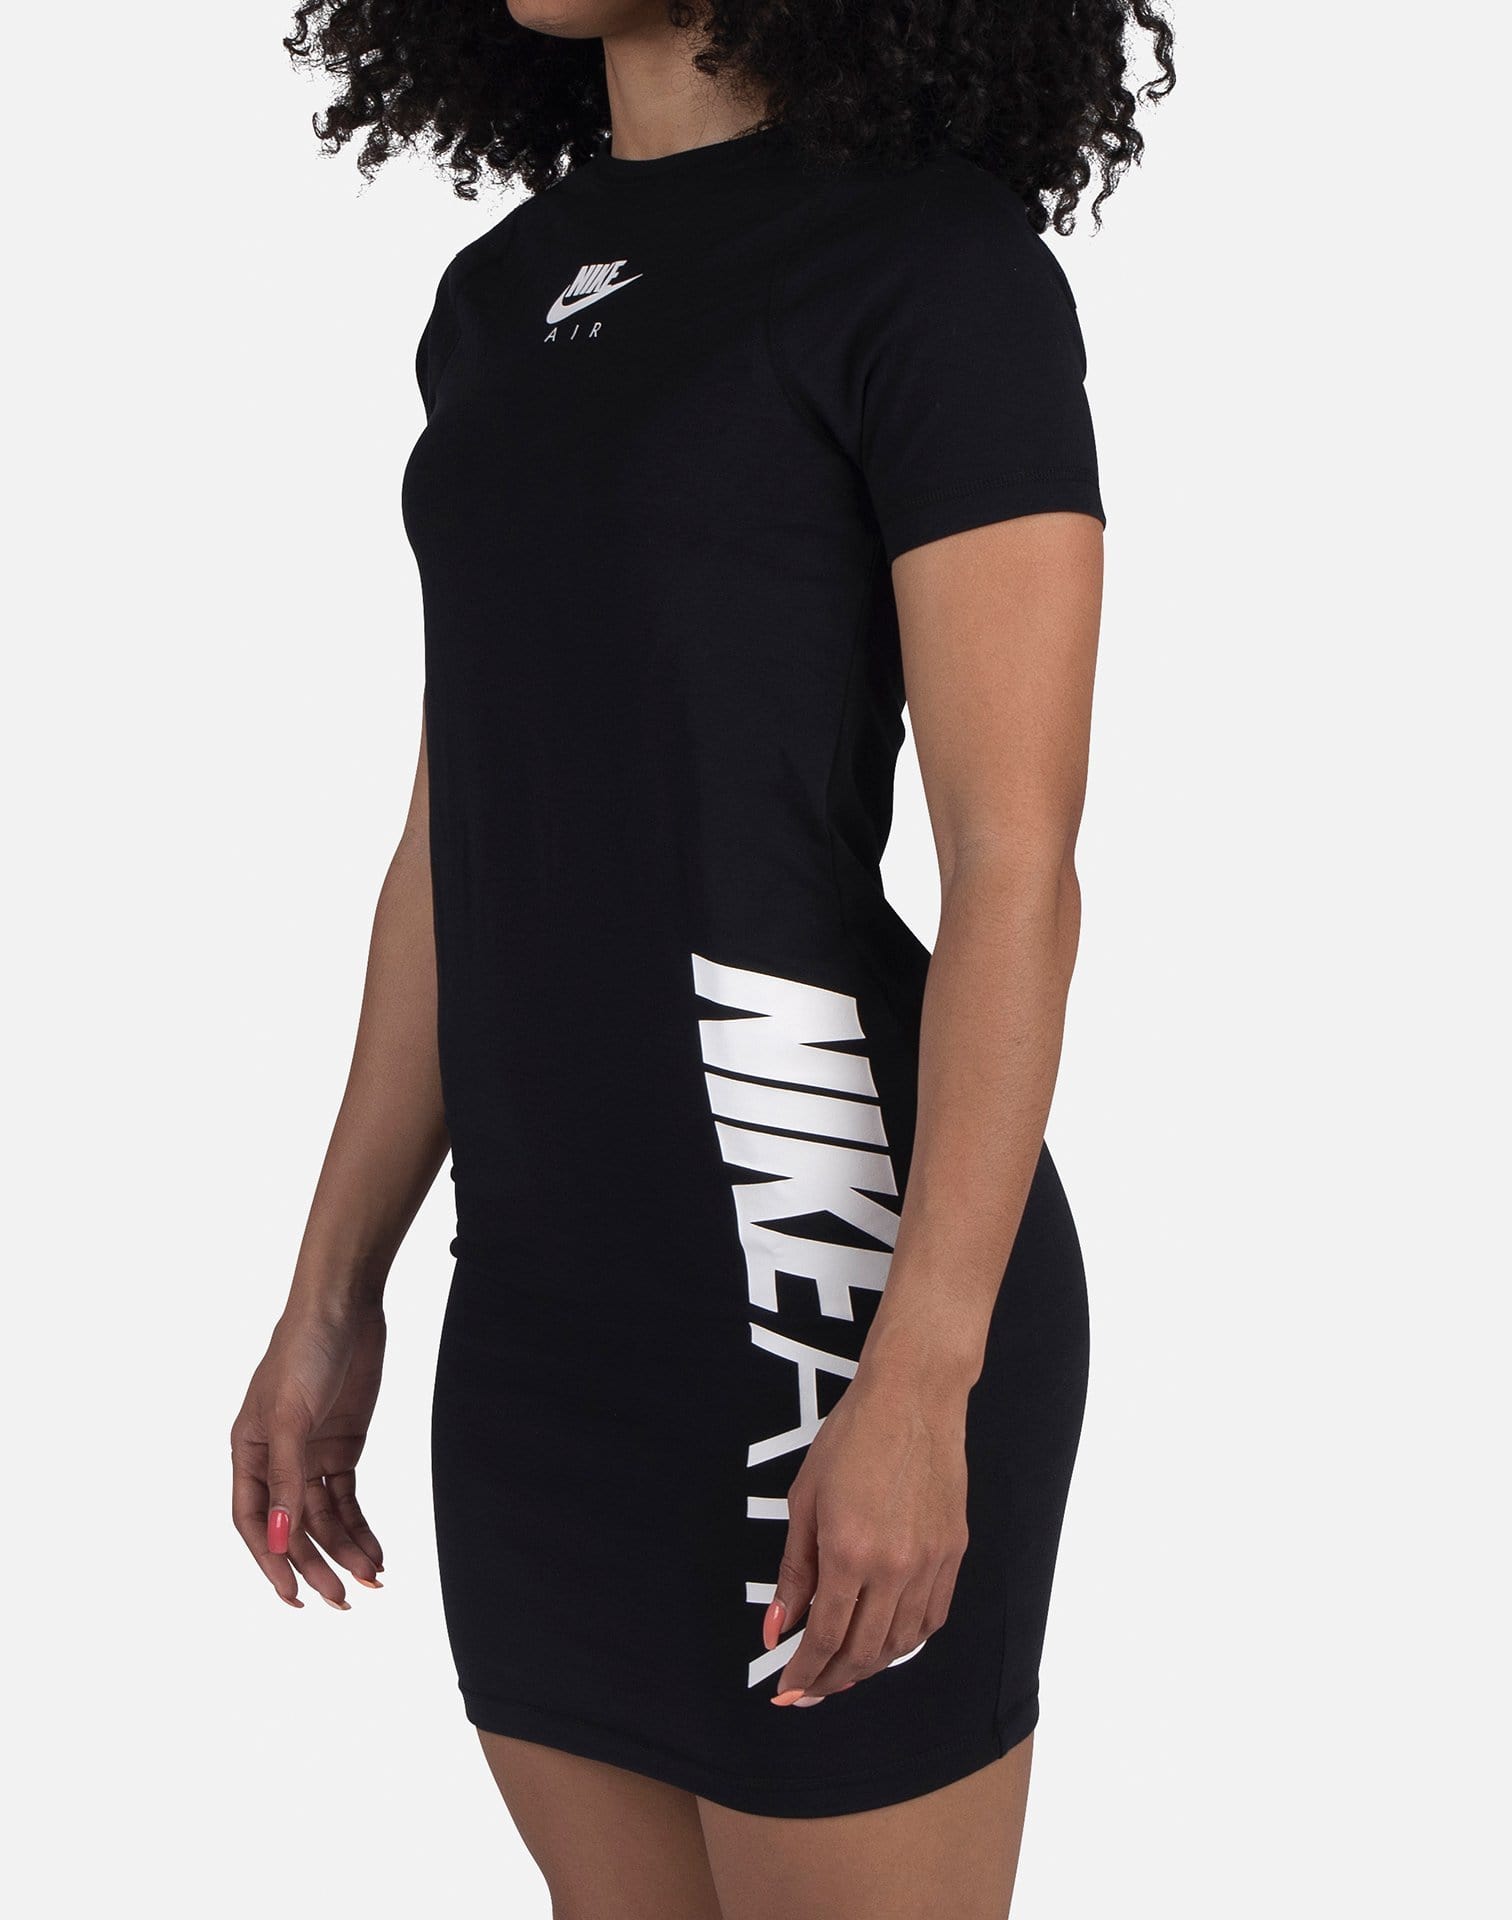 Nike Women's Air Dress